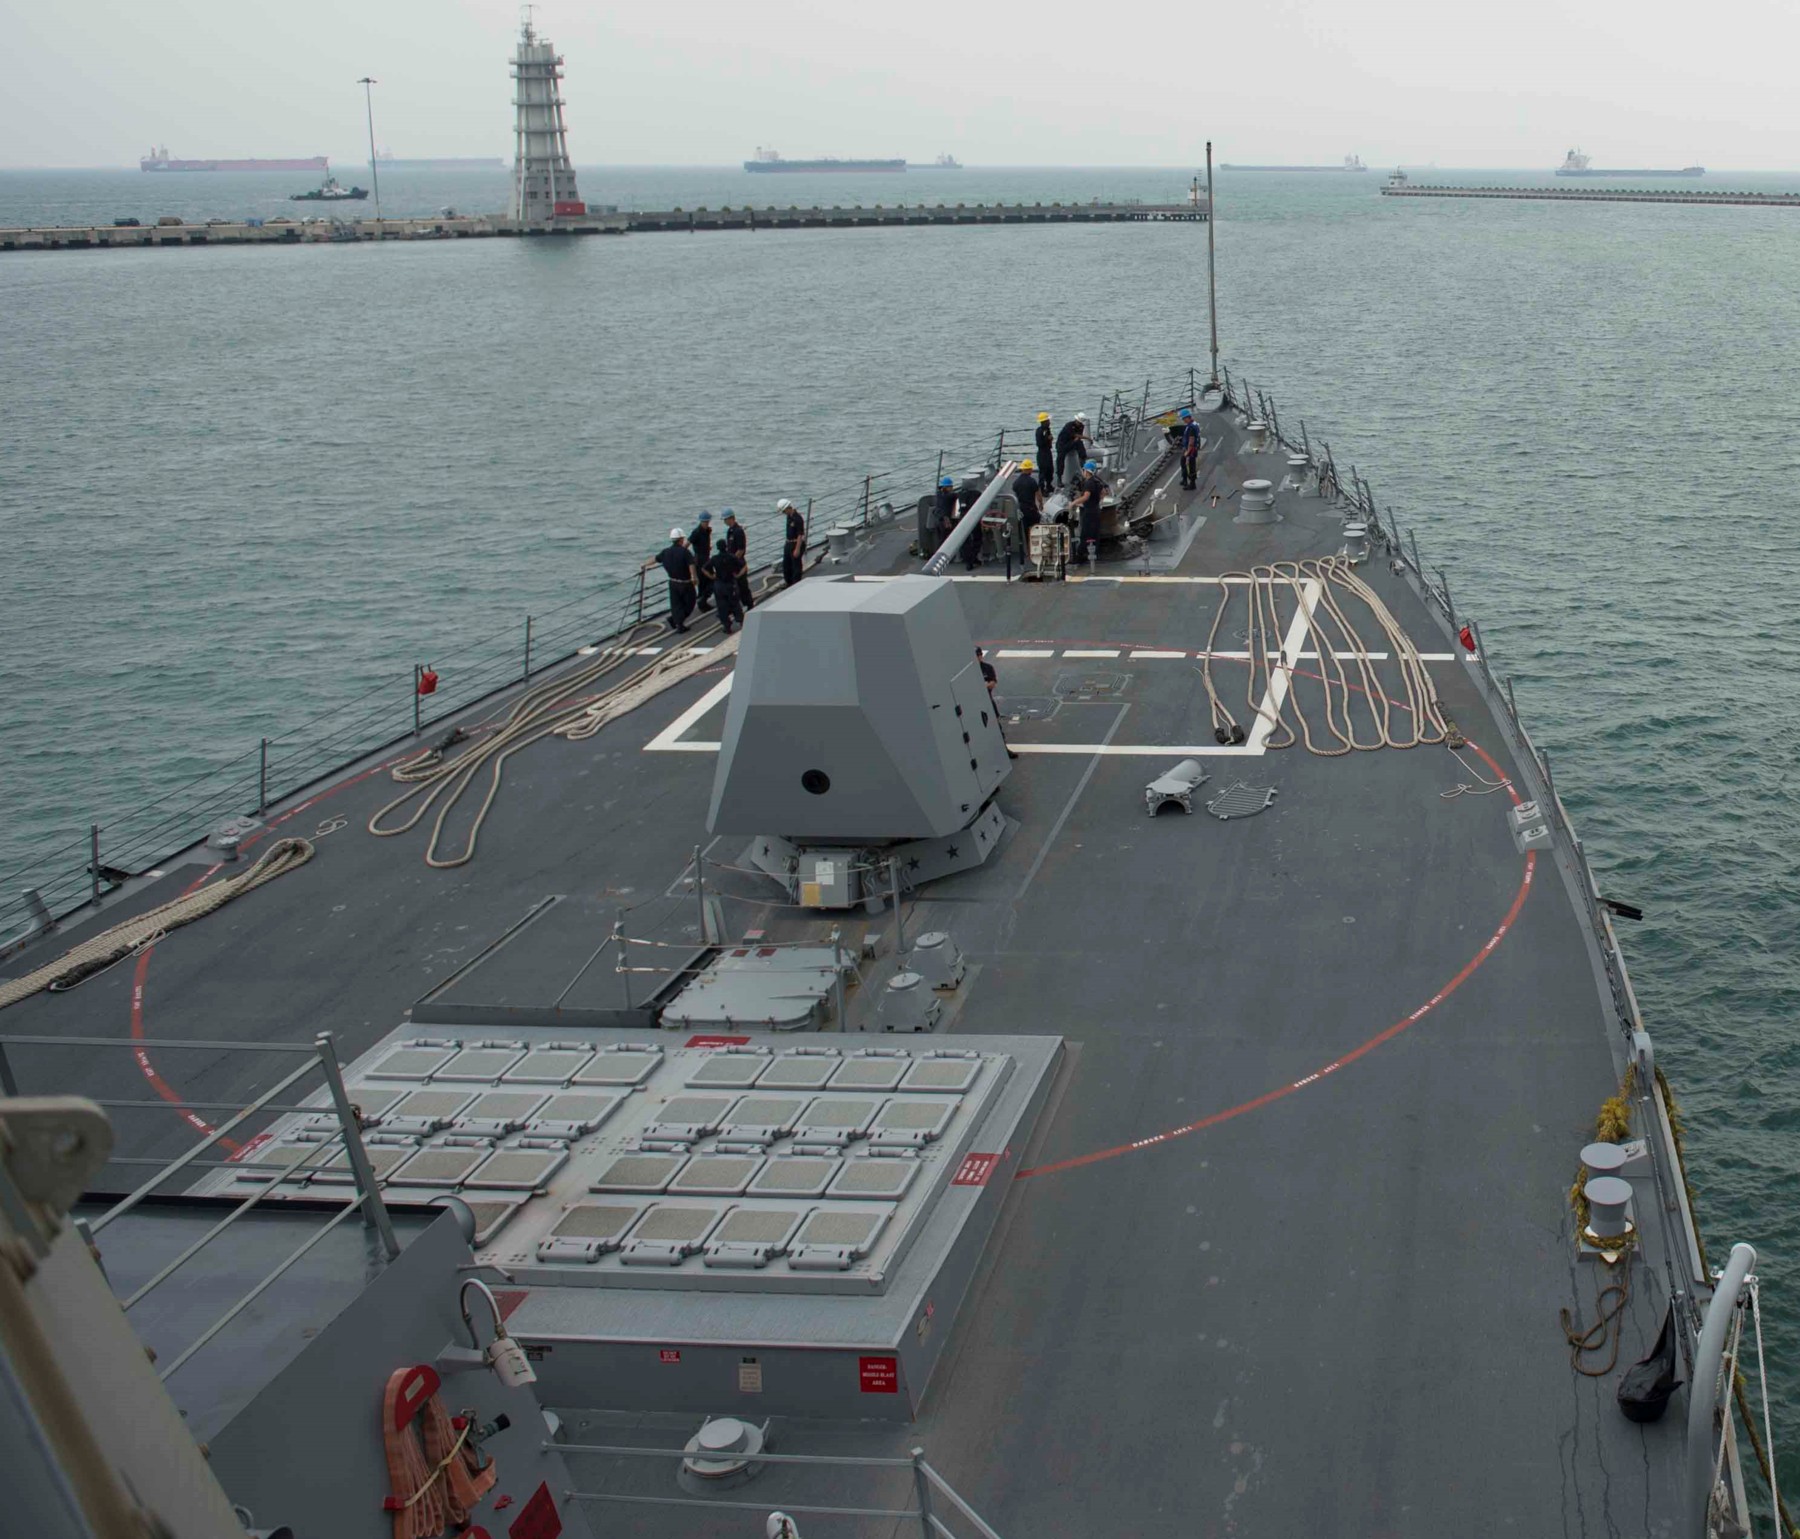 ddg-110 uss dewey arleigh burke class guided missile destroyer aegis us navy changi singapore 21